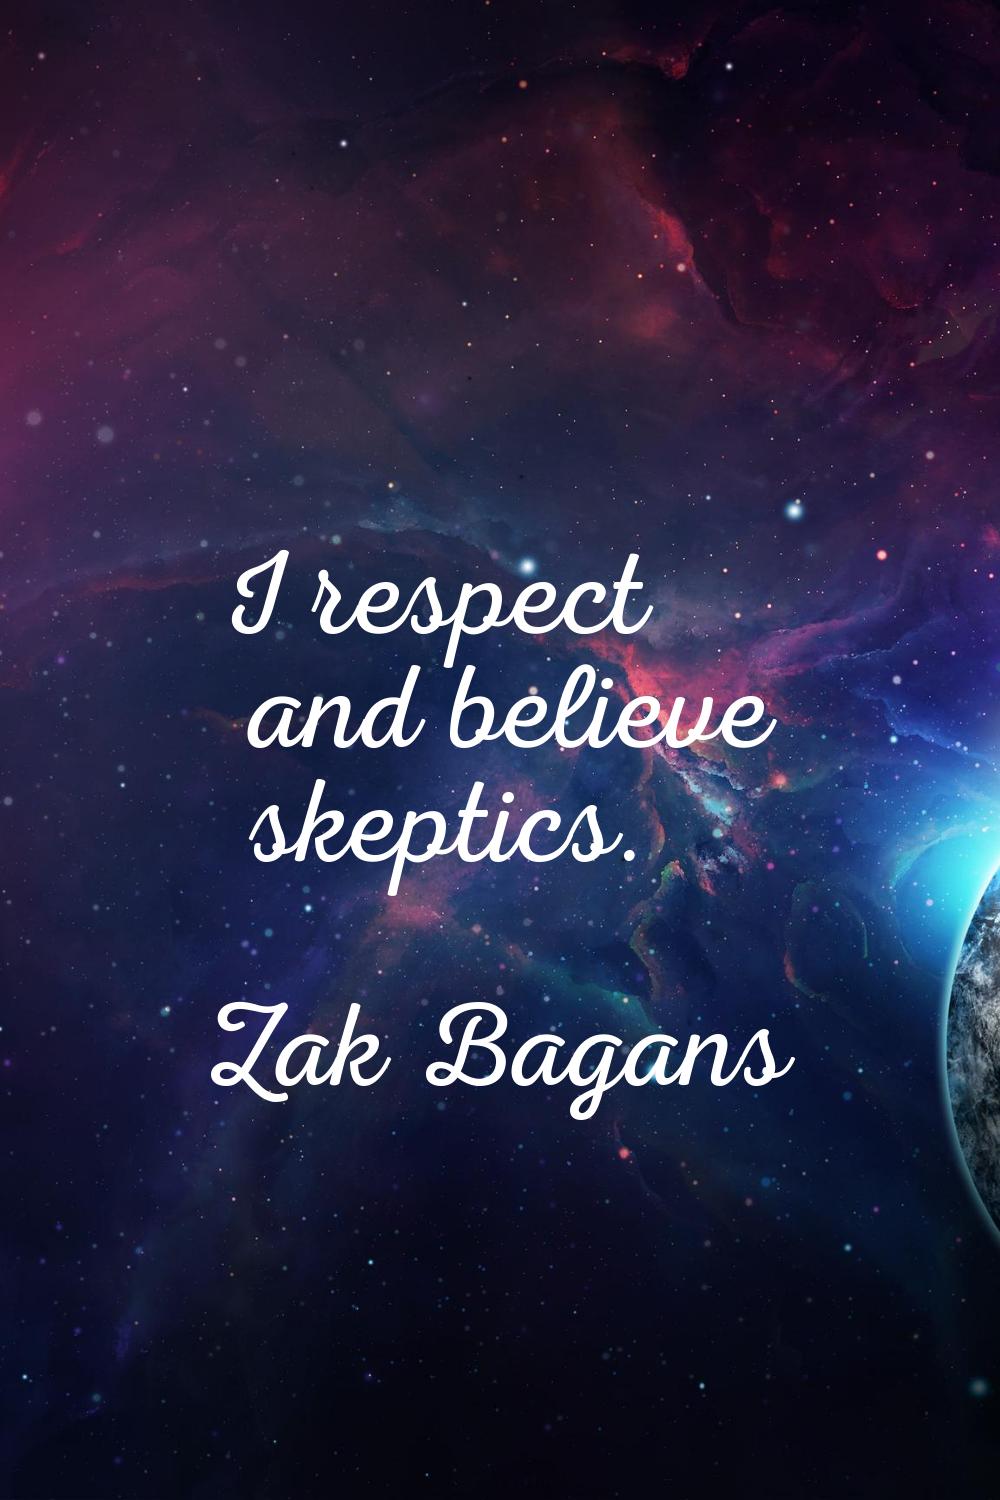 I respect and believe skeptics.